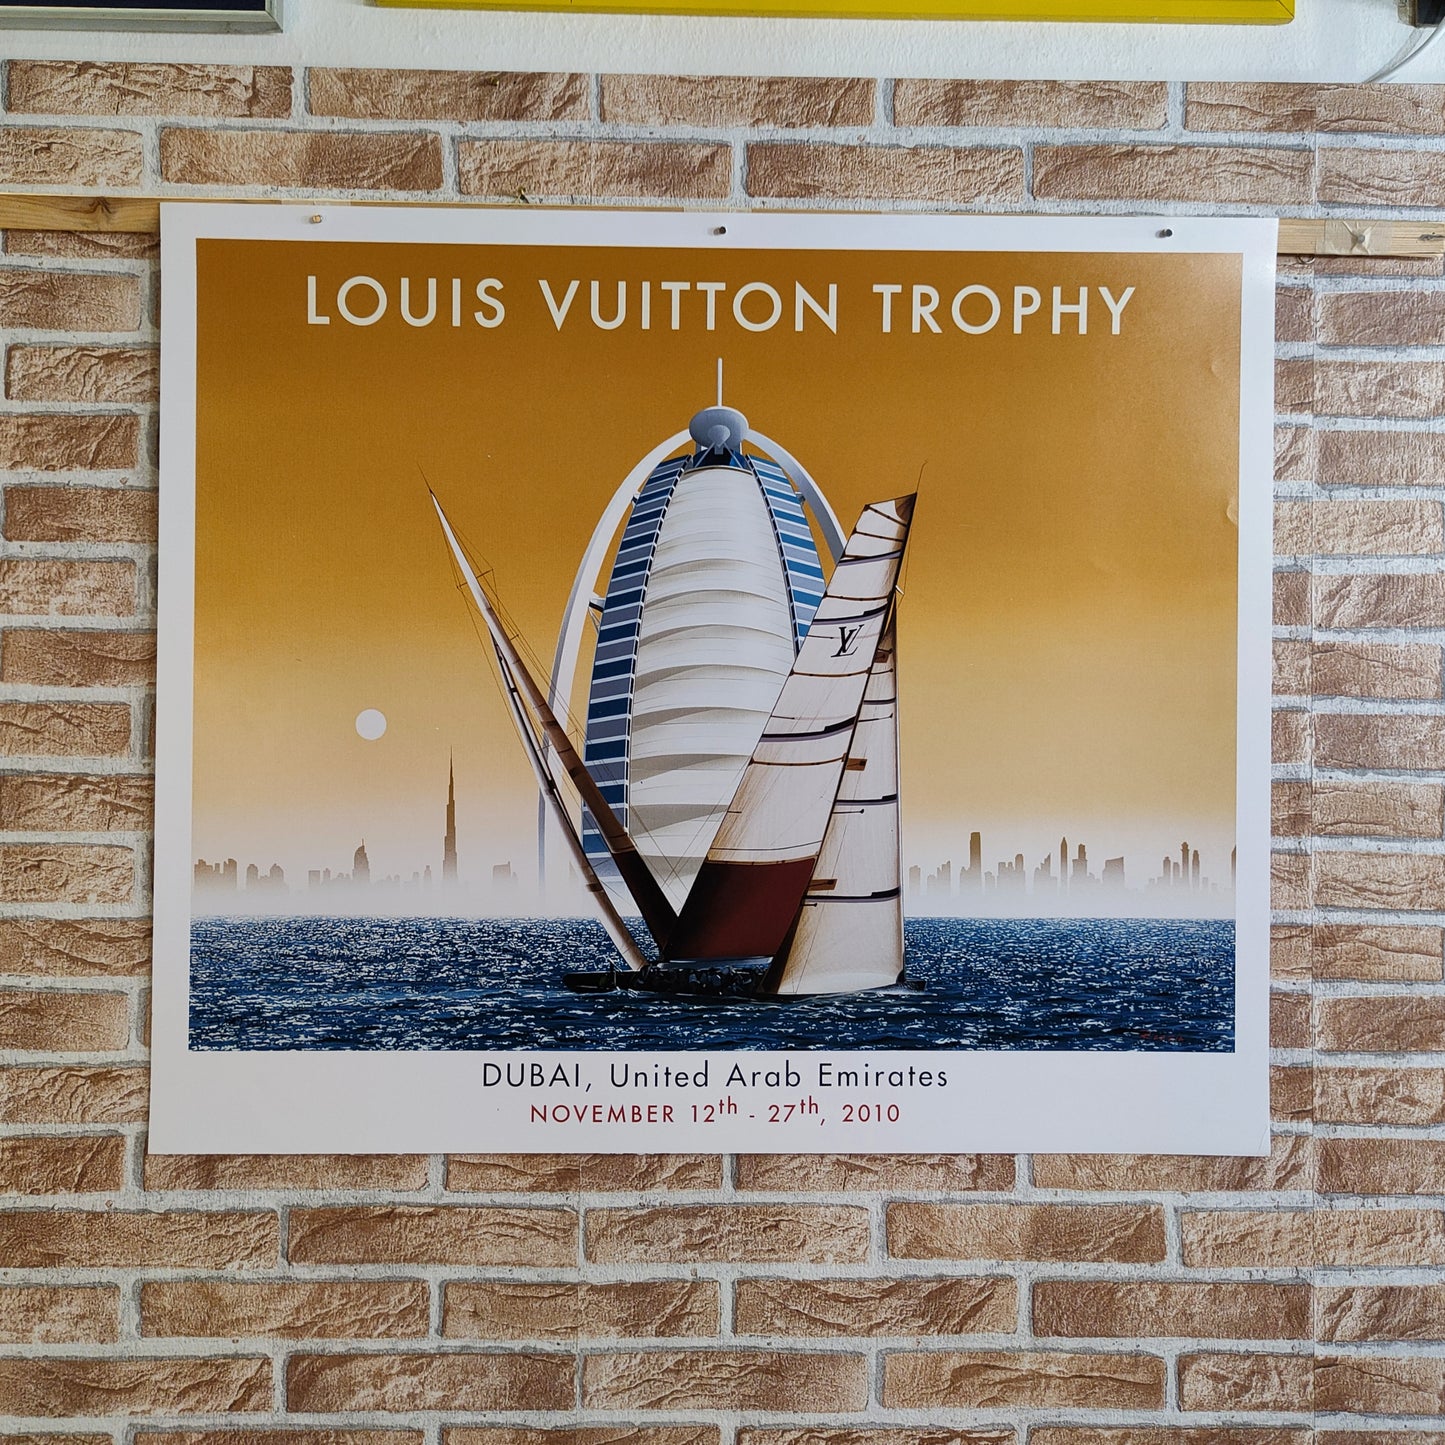 Razzia | Manifesto pubblicitario - Louis Vuitton Trophy - Dubai